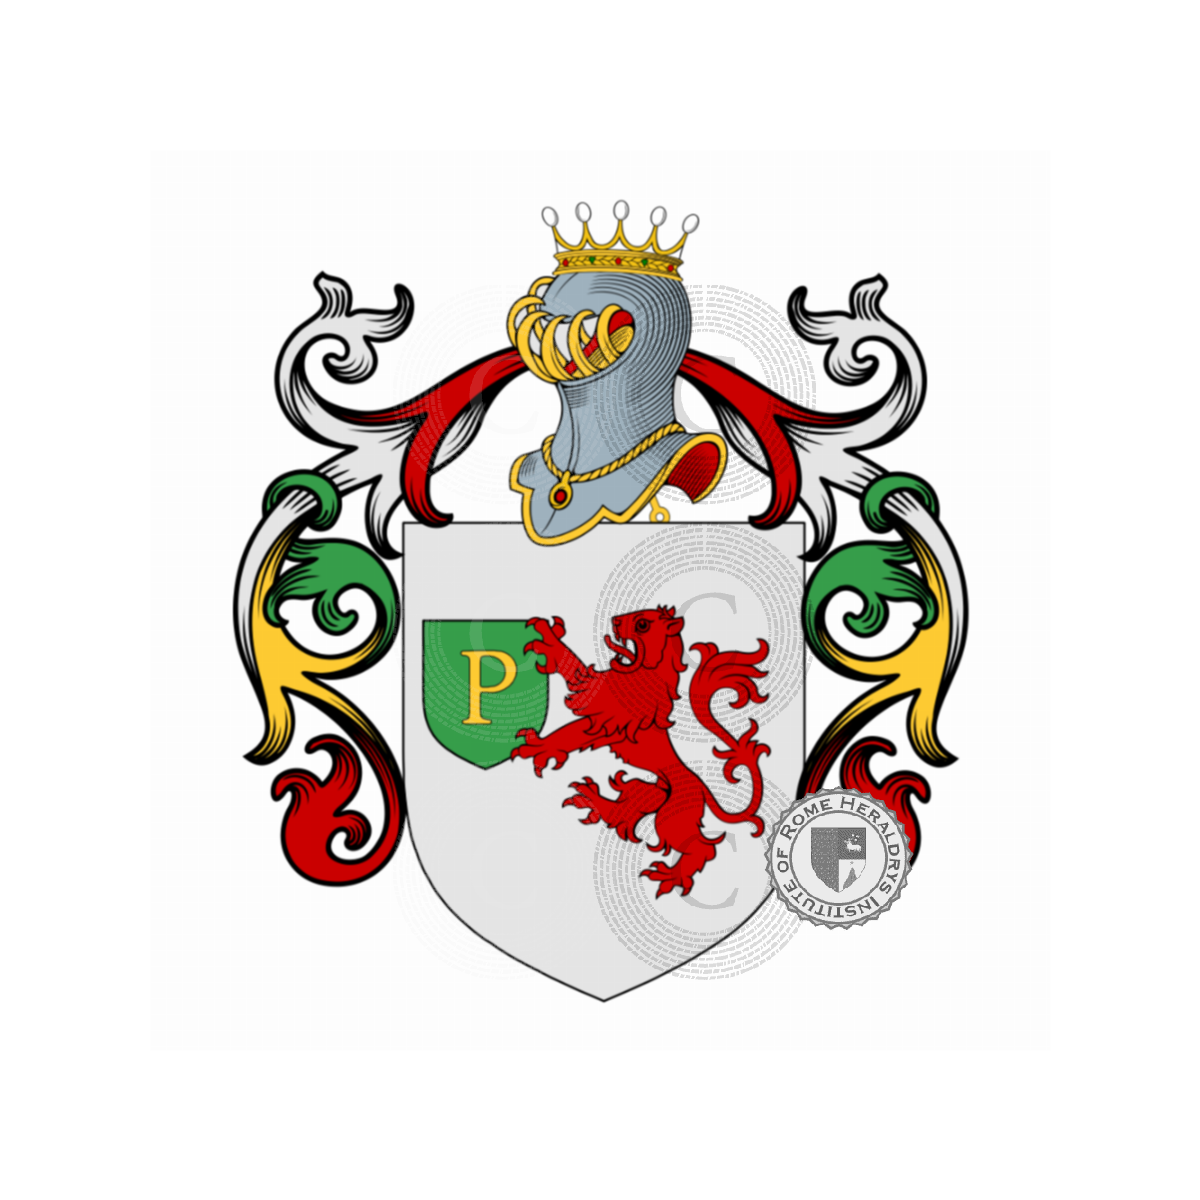 Wappen der FamiliePace, dalla Pace,de Pace,del Pace d'Orso,del Pace Dardi,Pace di Montemaggiore